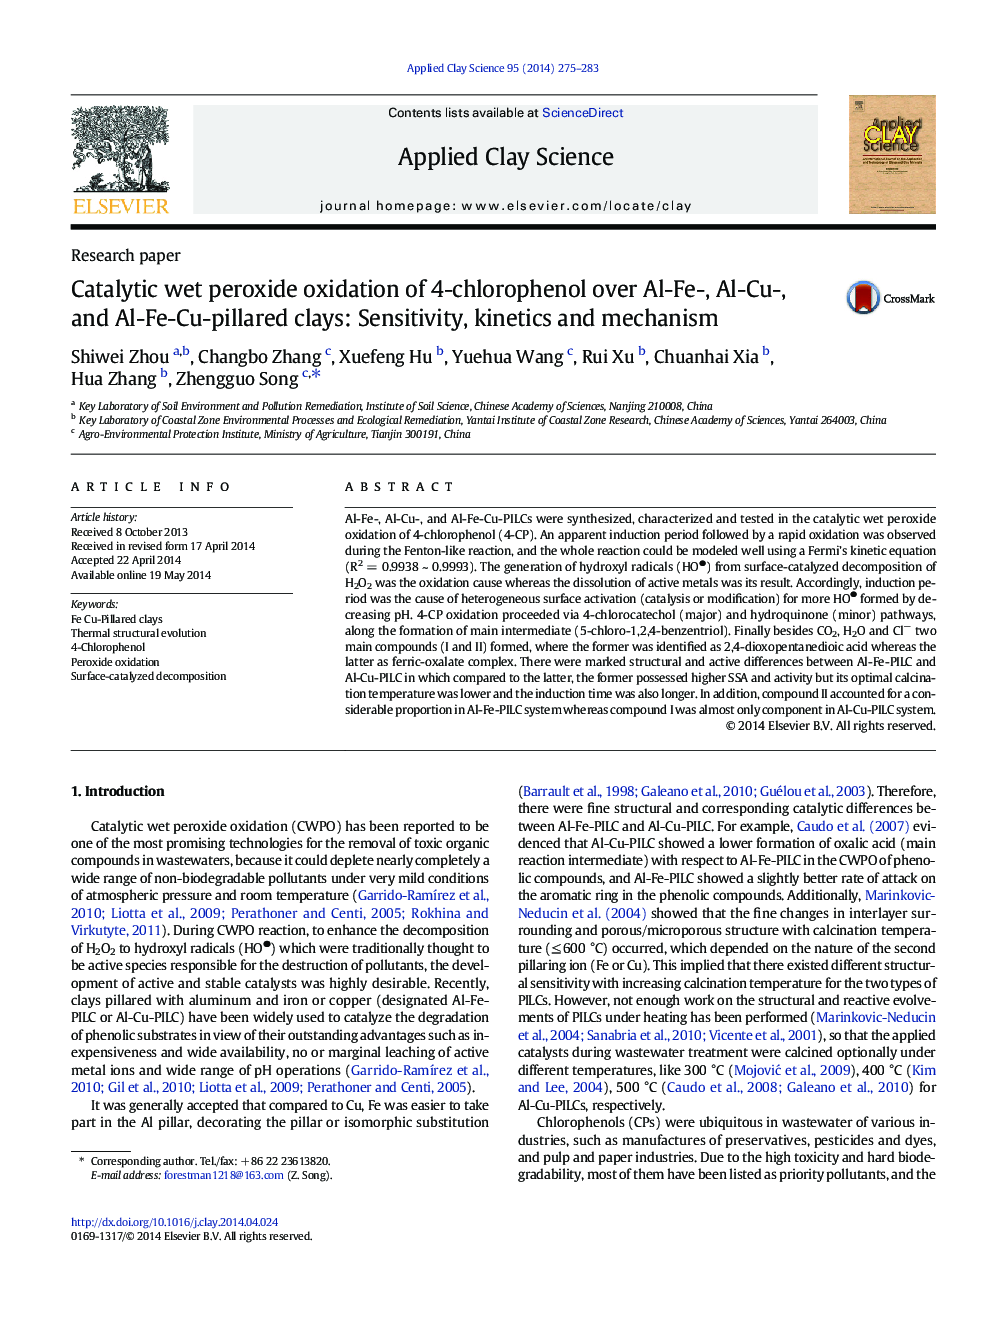 Catalytic wet peroxide oxidation of 4-chlorophenol over Al-Fe-, Al-Cu-, and Al-Fe-Cu-pillared clays: Sensitivity, kinetics and mechanism